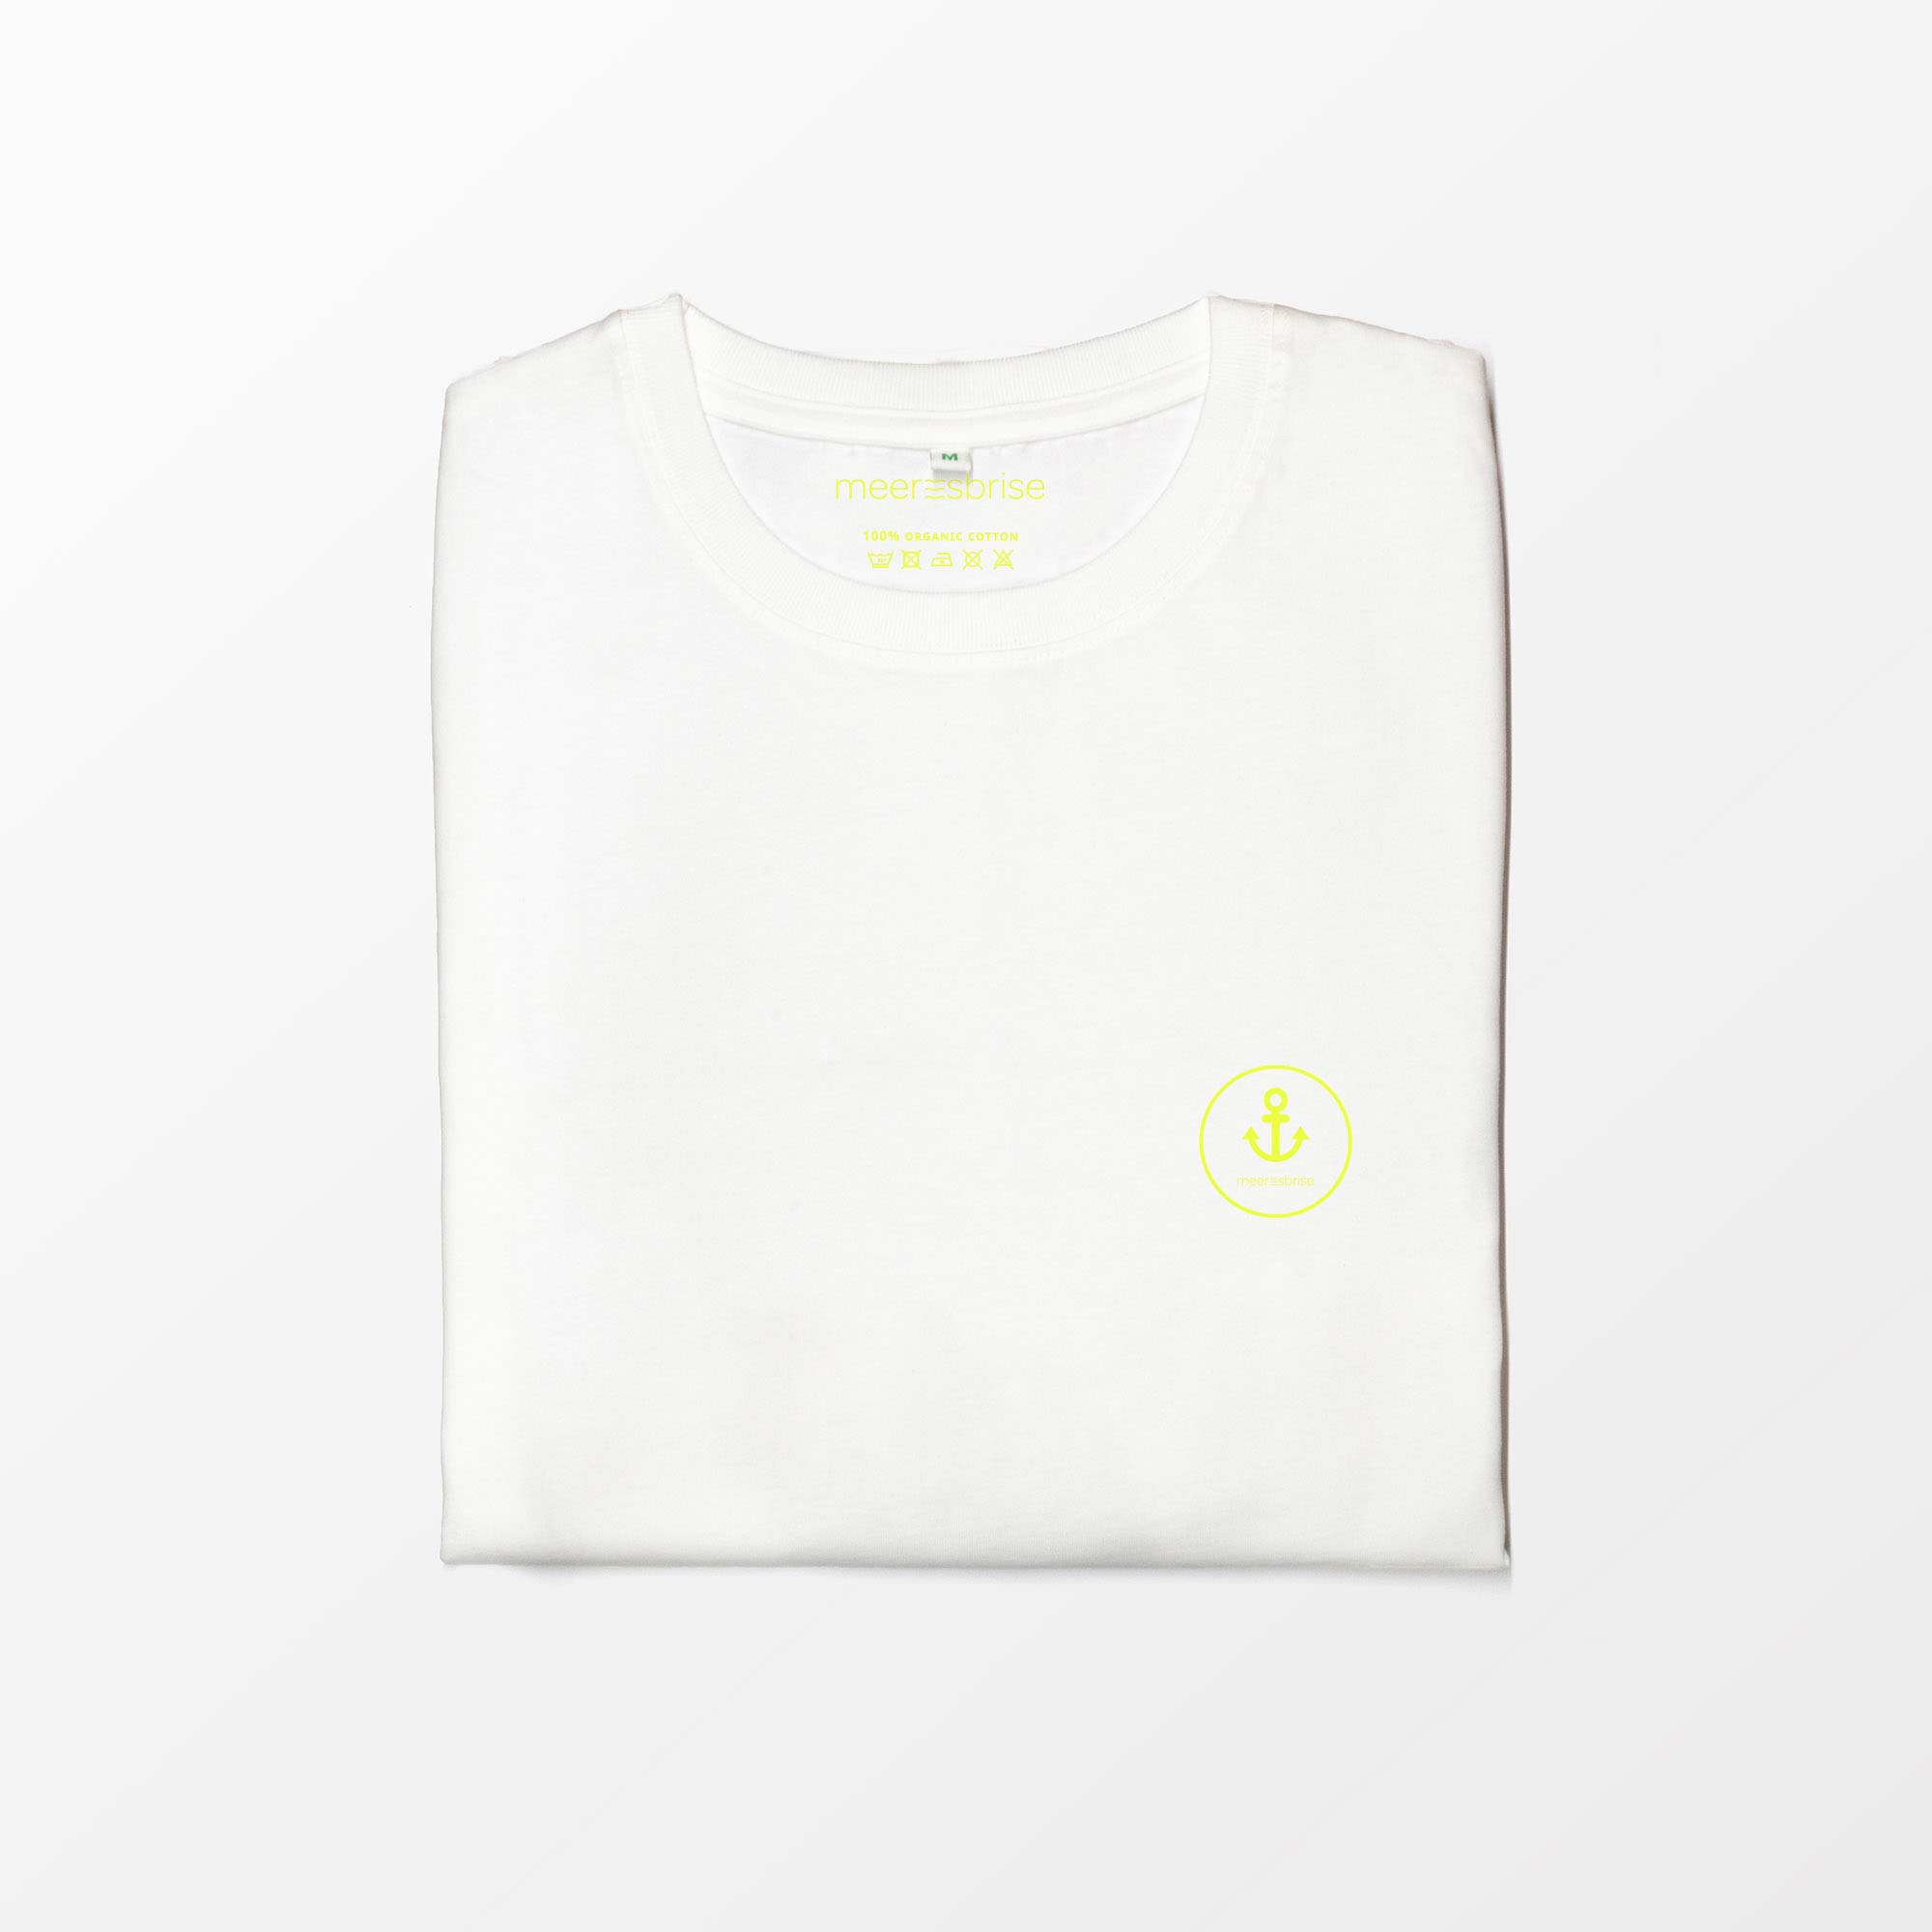 meeresbrise-shirt-men-white-anker-neon-yellow.jpg